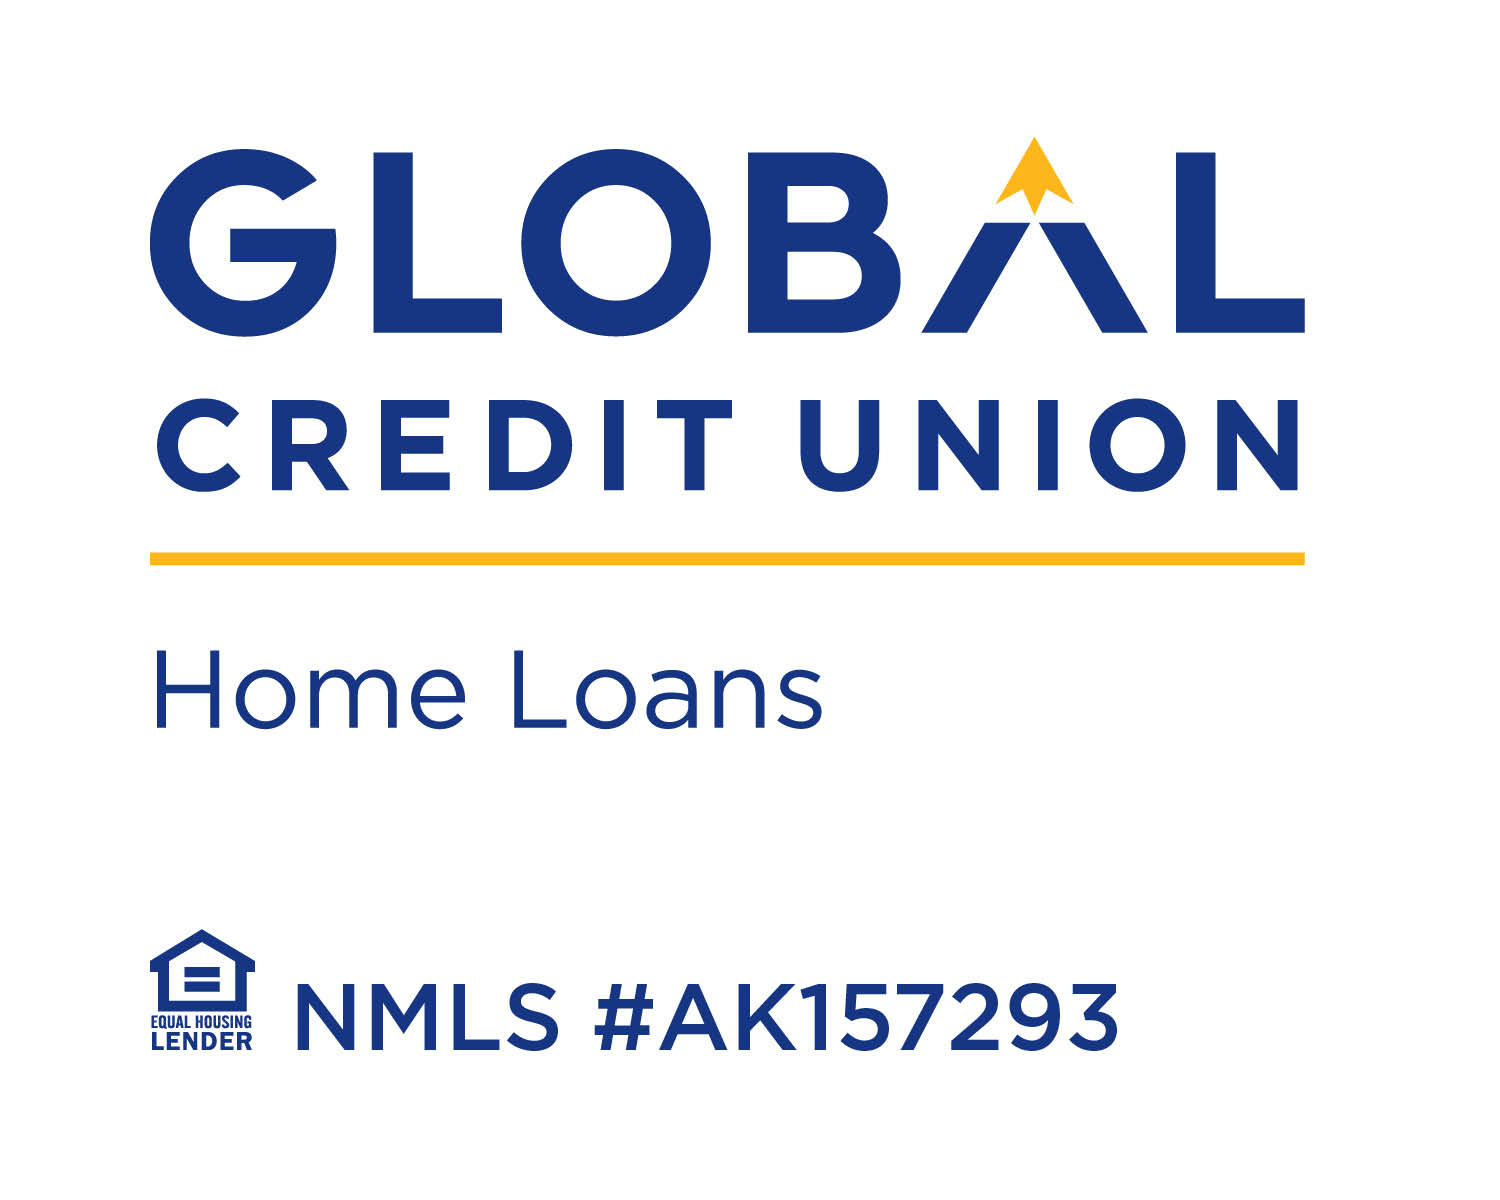 Global Credit Union Home Loans